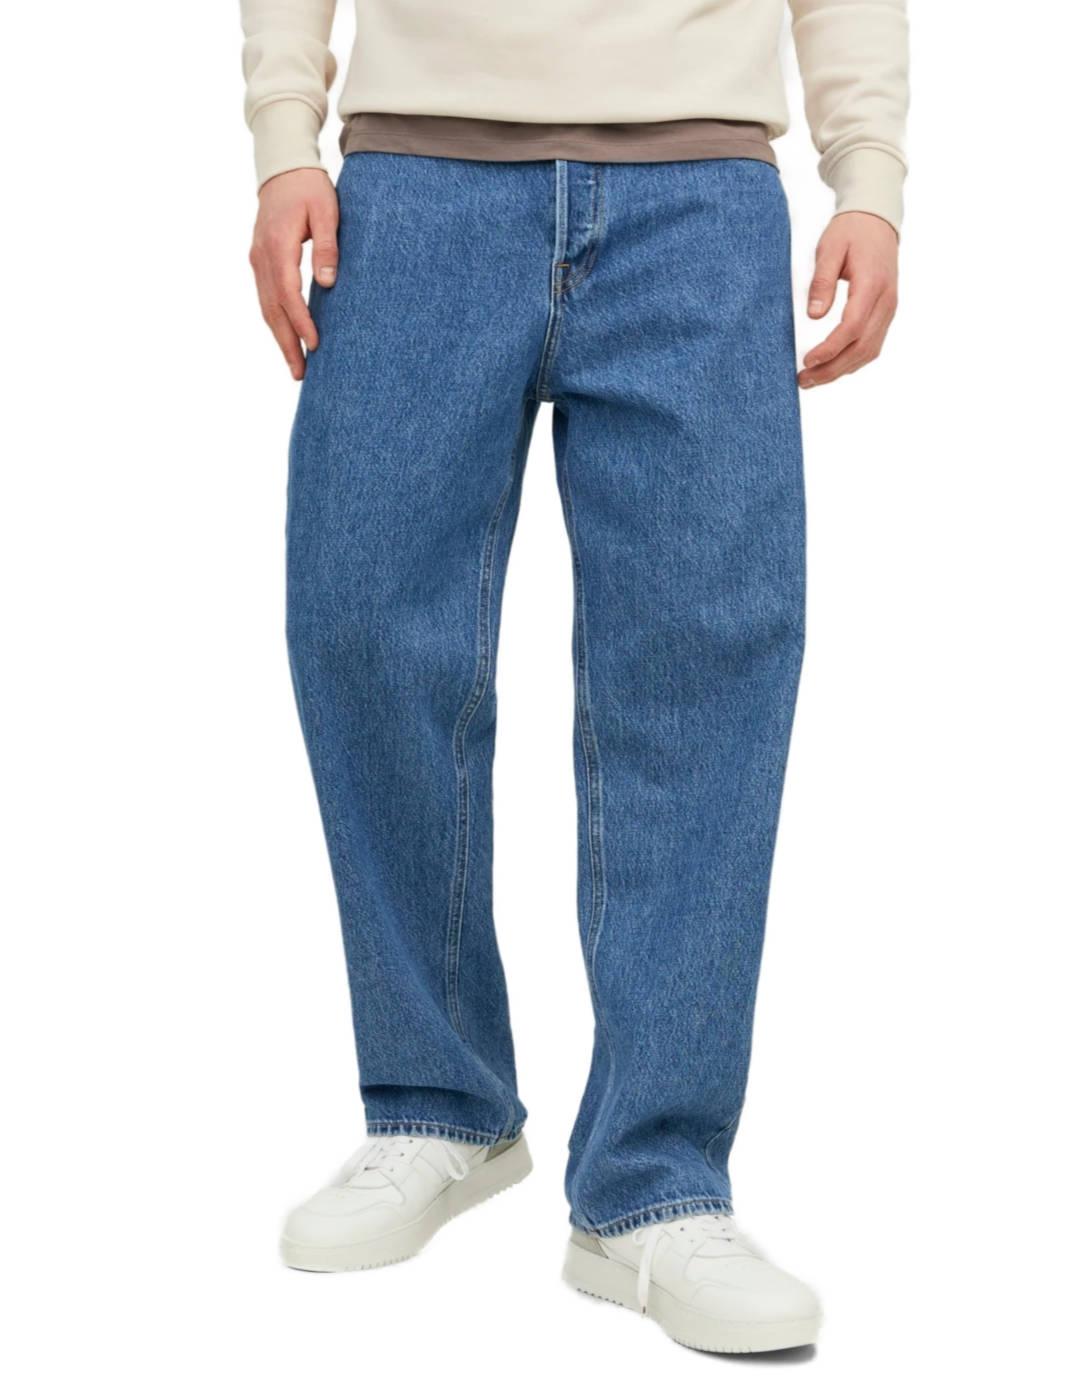 Pantalones Vaqueros Rectos para Hombre – Bustins Jeans